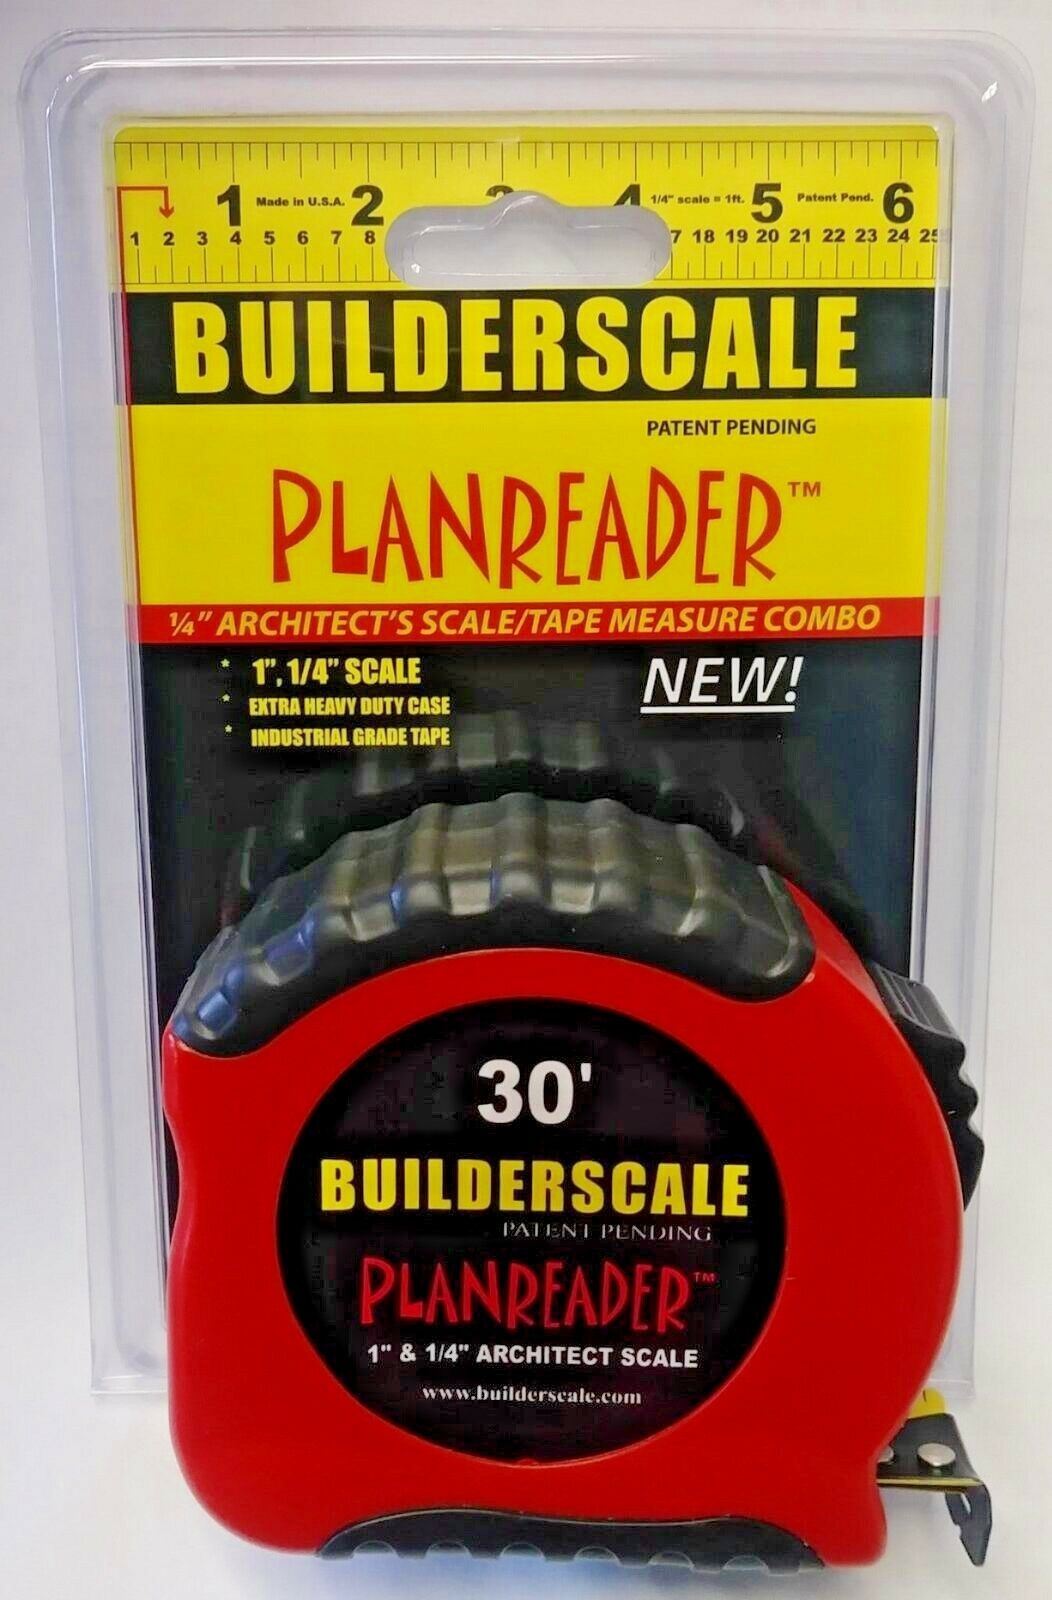 Builderscale Planreader 52630 30' Tape Measure & 1" & 1/4" Architect Scale USA